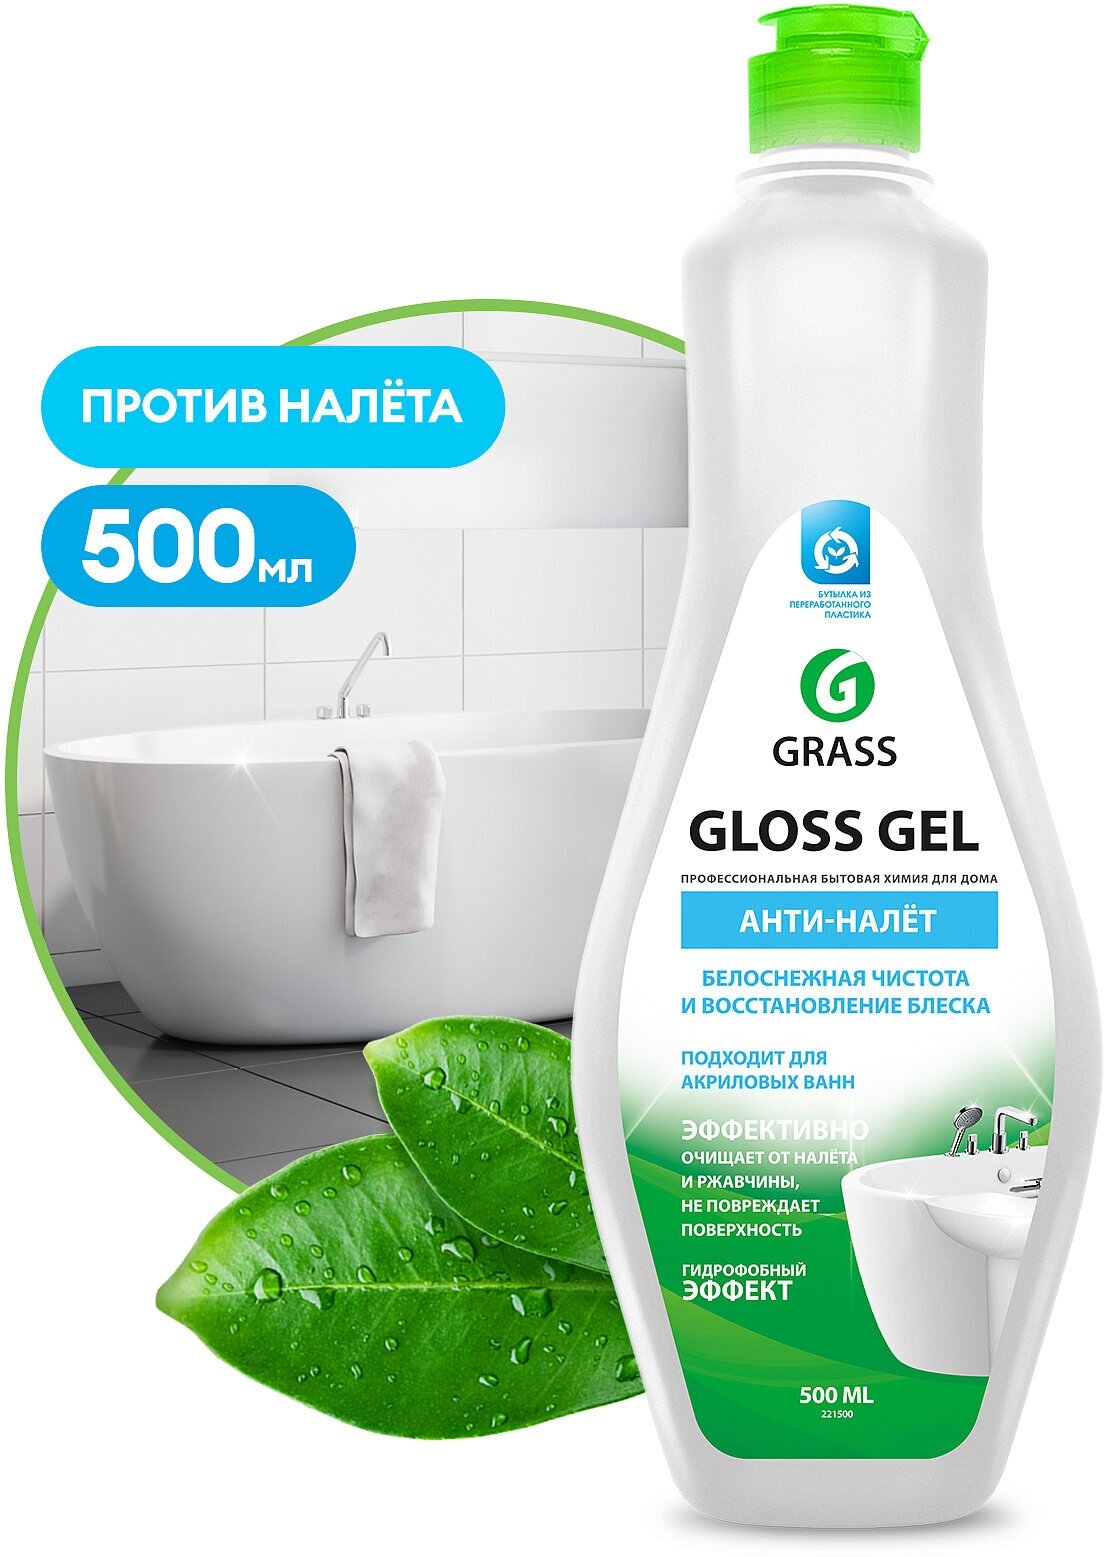 Очиститель для ванной комнаты Grass Gloss Gel Анти-налет 500 мл GRASS 221500 | цена за 1 шт